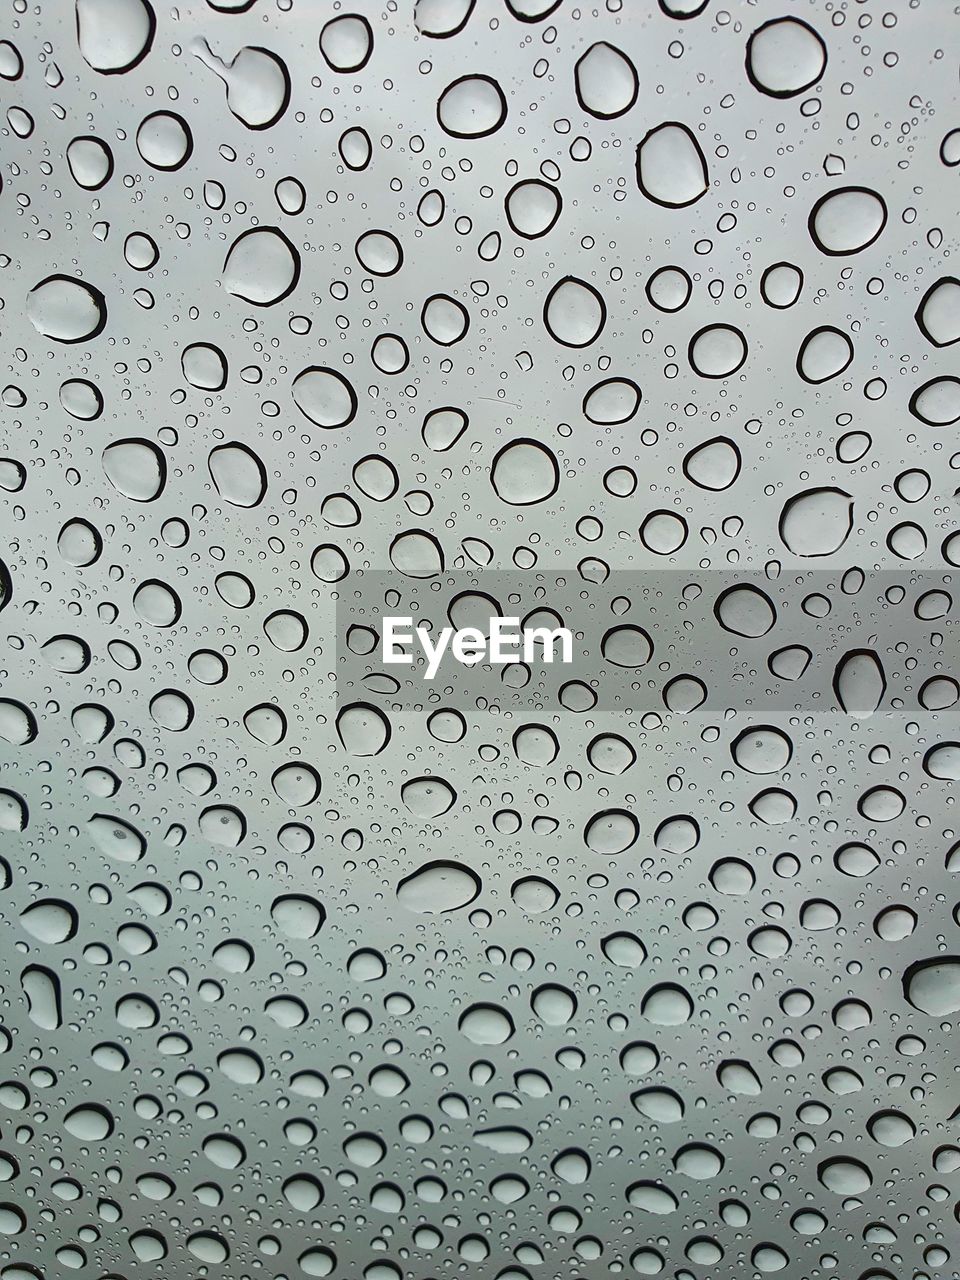 A shot of raindrops on a sunroof